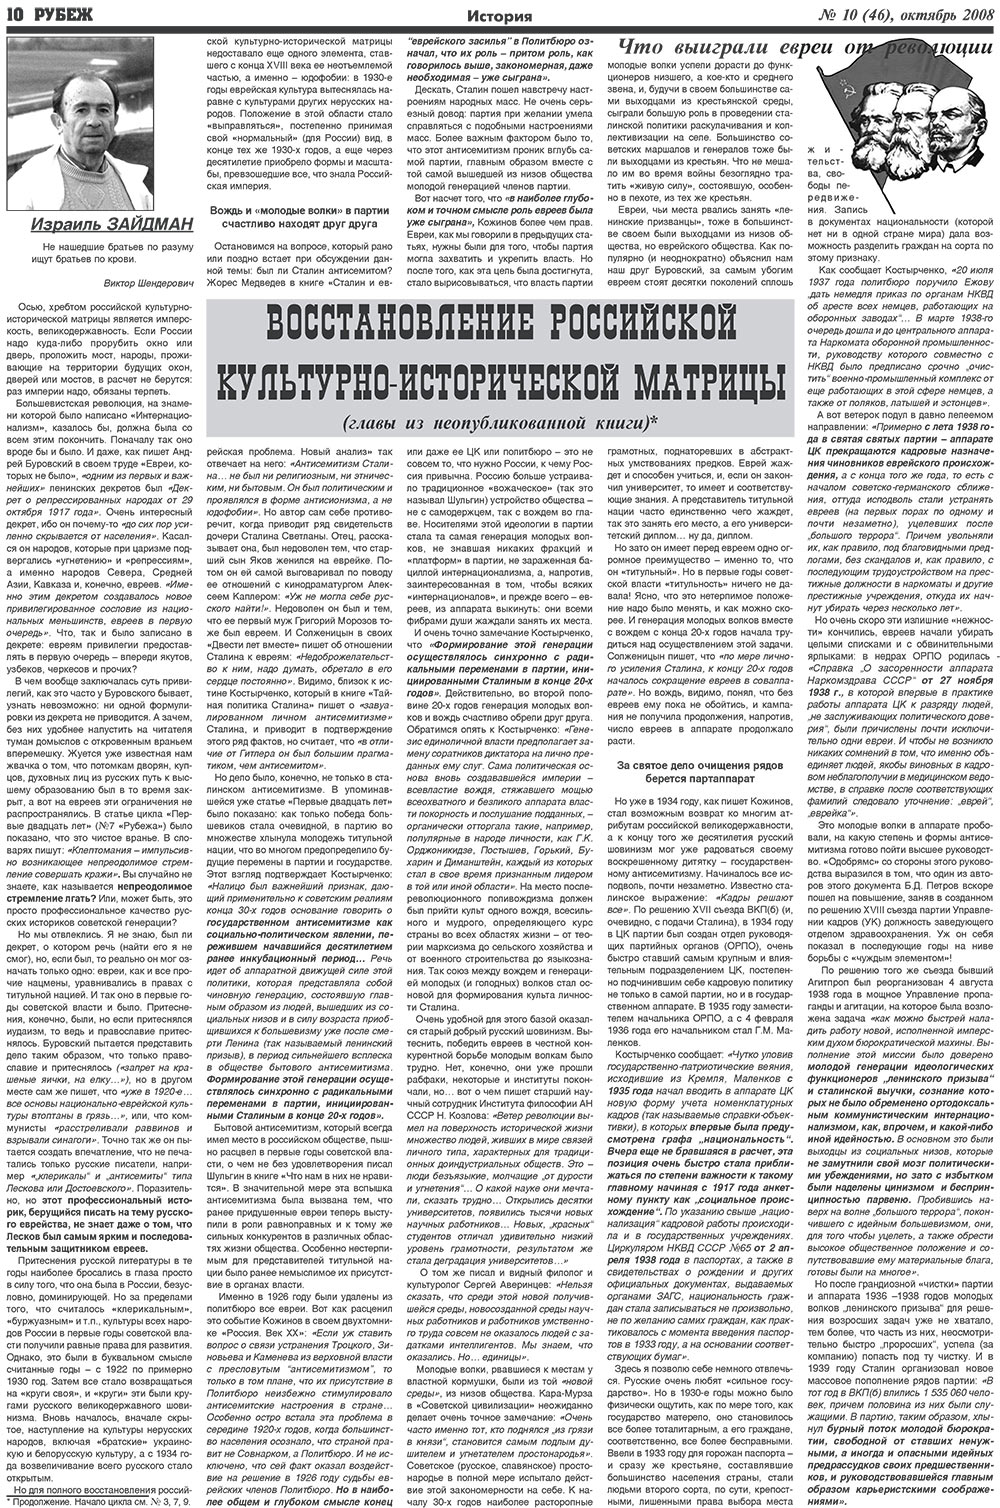 Рубеж, газета. 2008 №10 стр.10